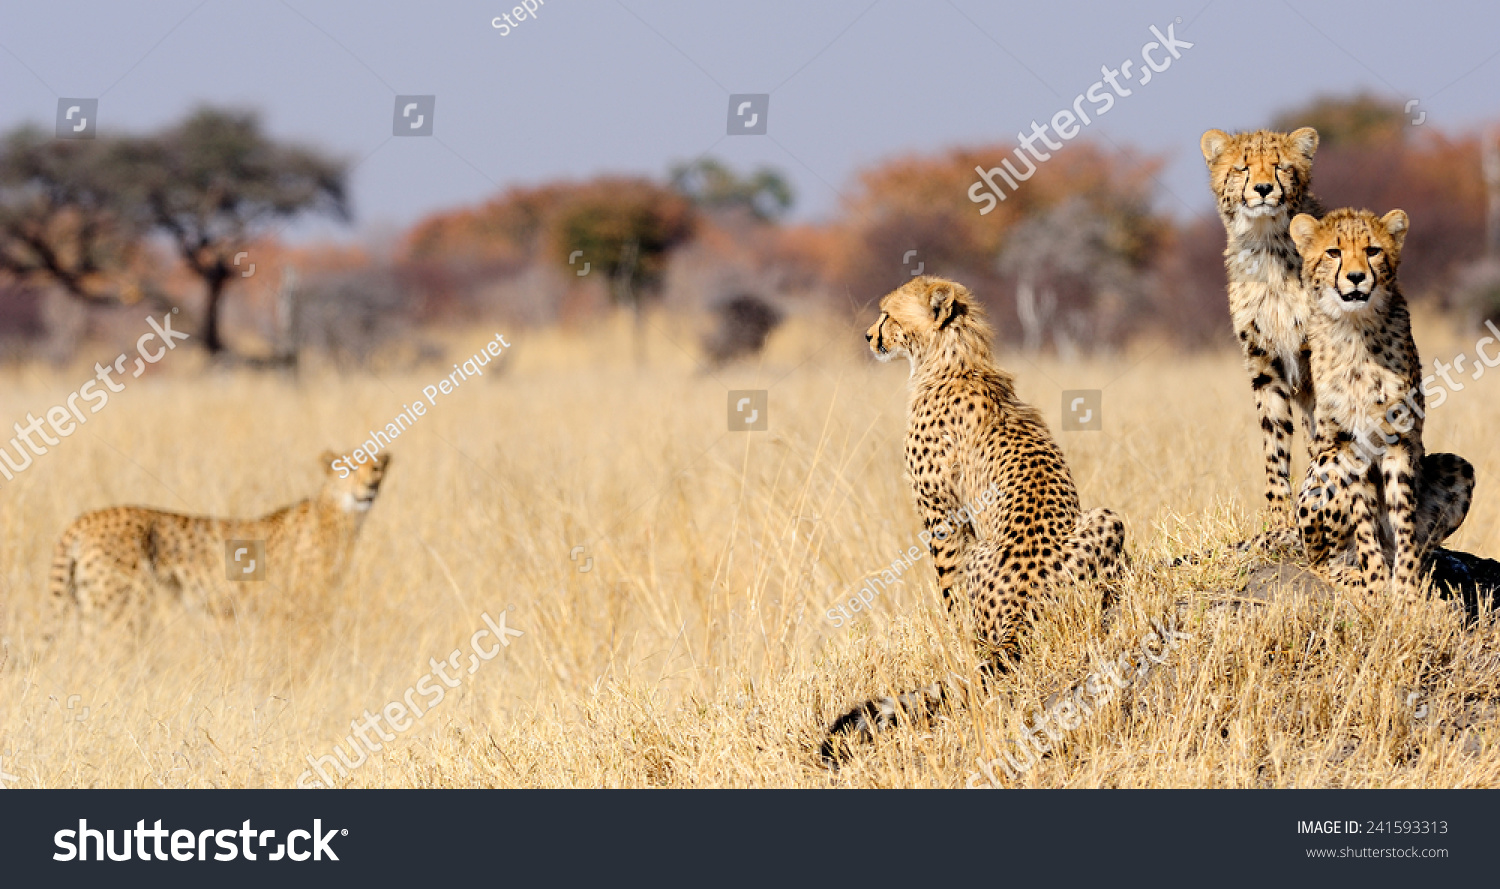 stock-photo-cheetah-cubs-on-termite-mount-241593313.jpg